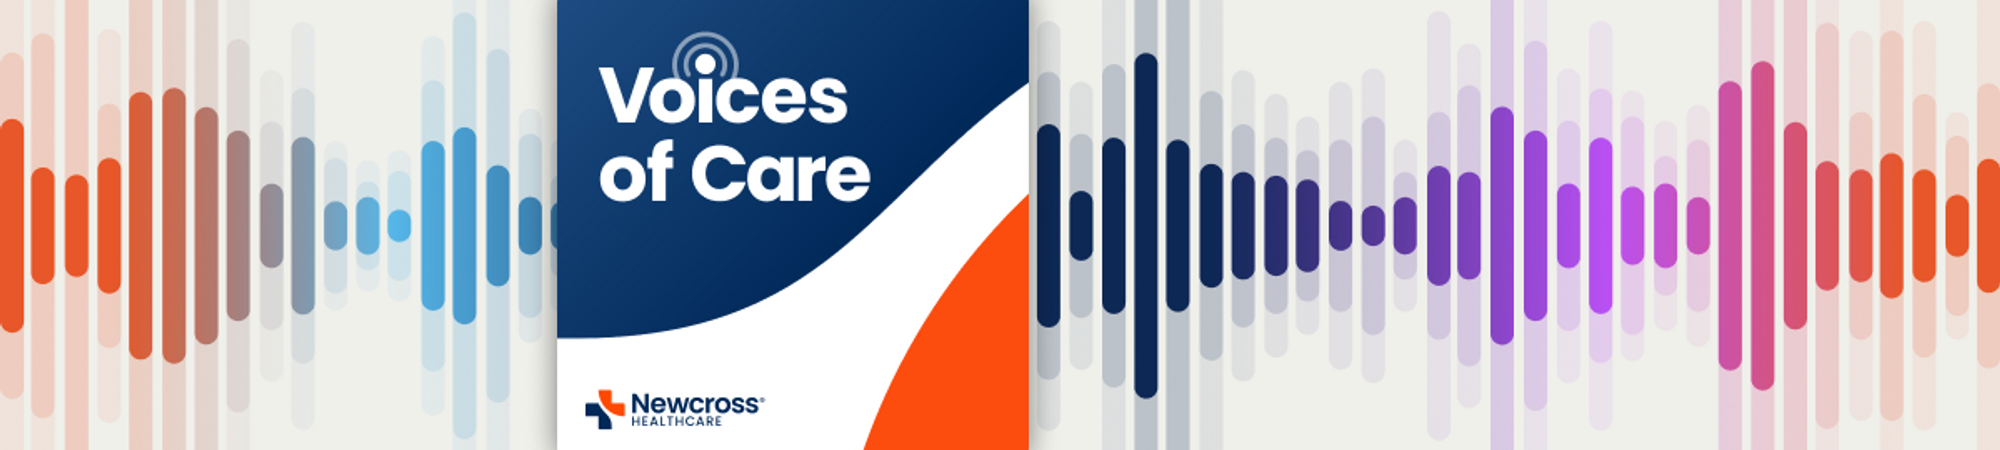 Newcross Healthcare Podcast Social Care